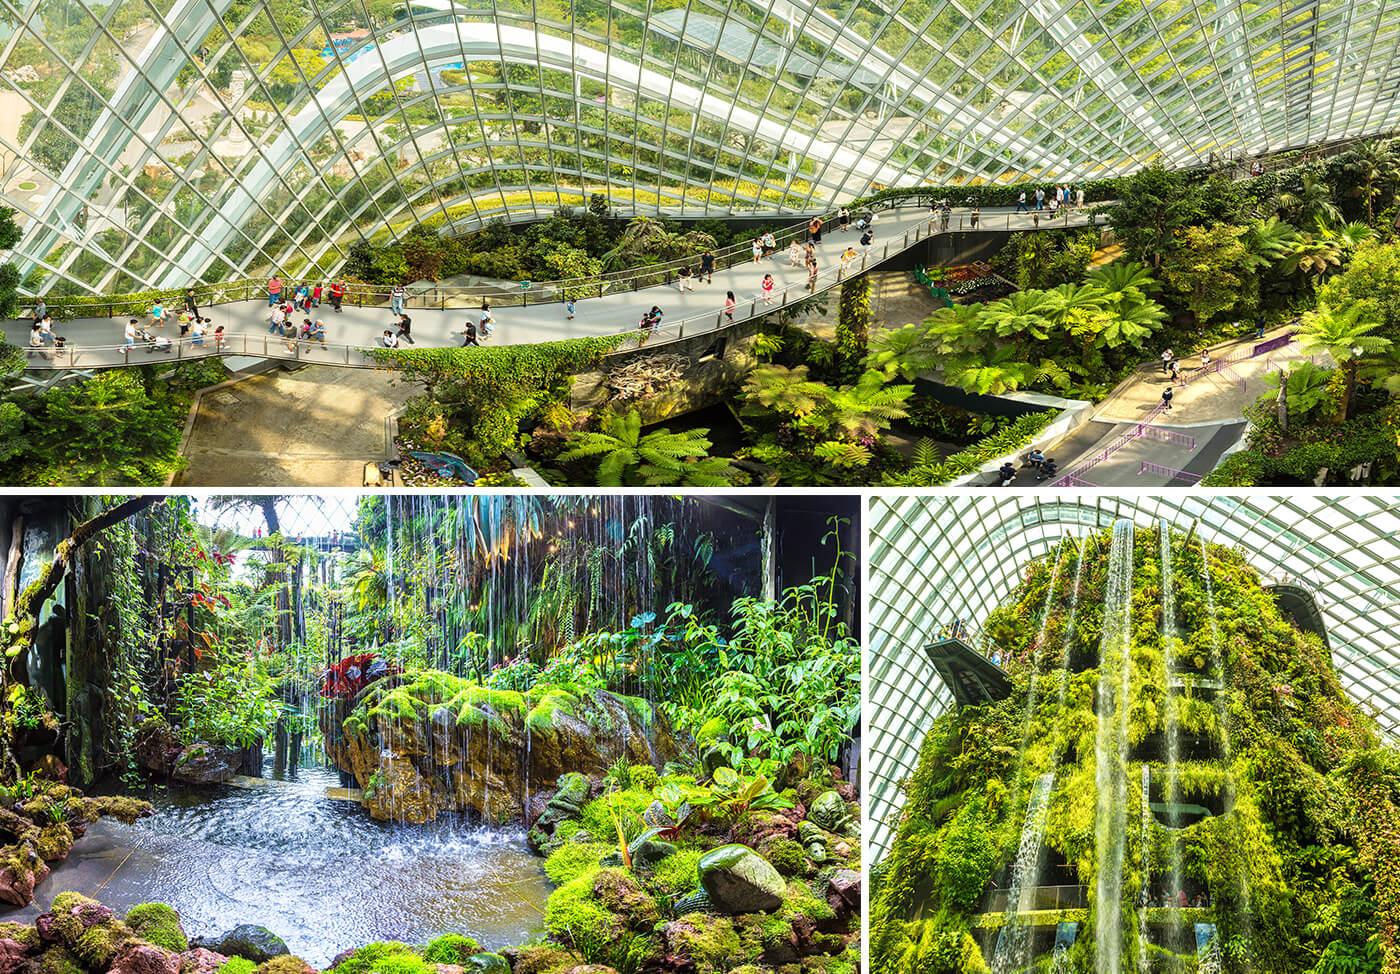 World's largest greenhouse 